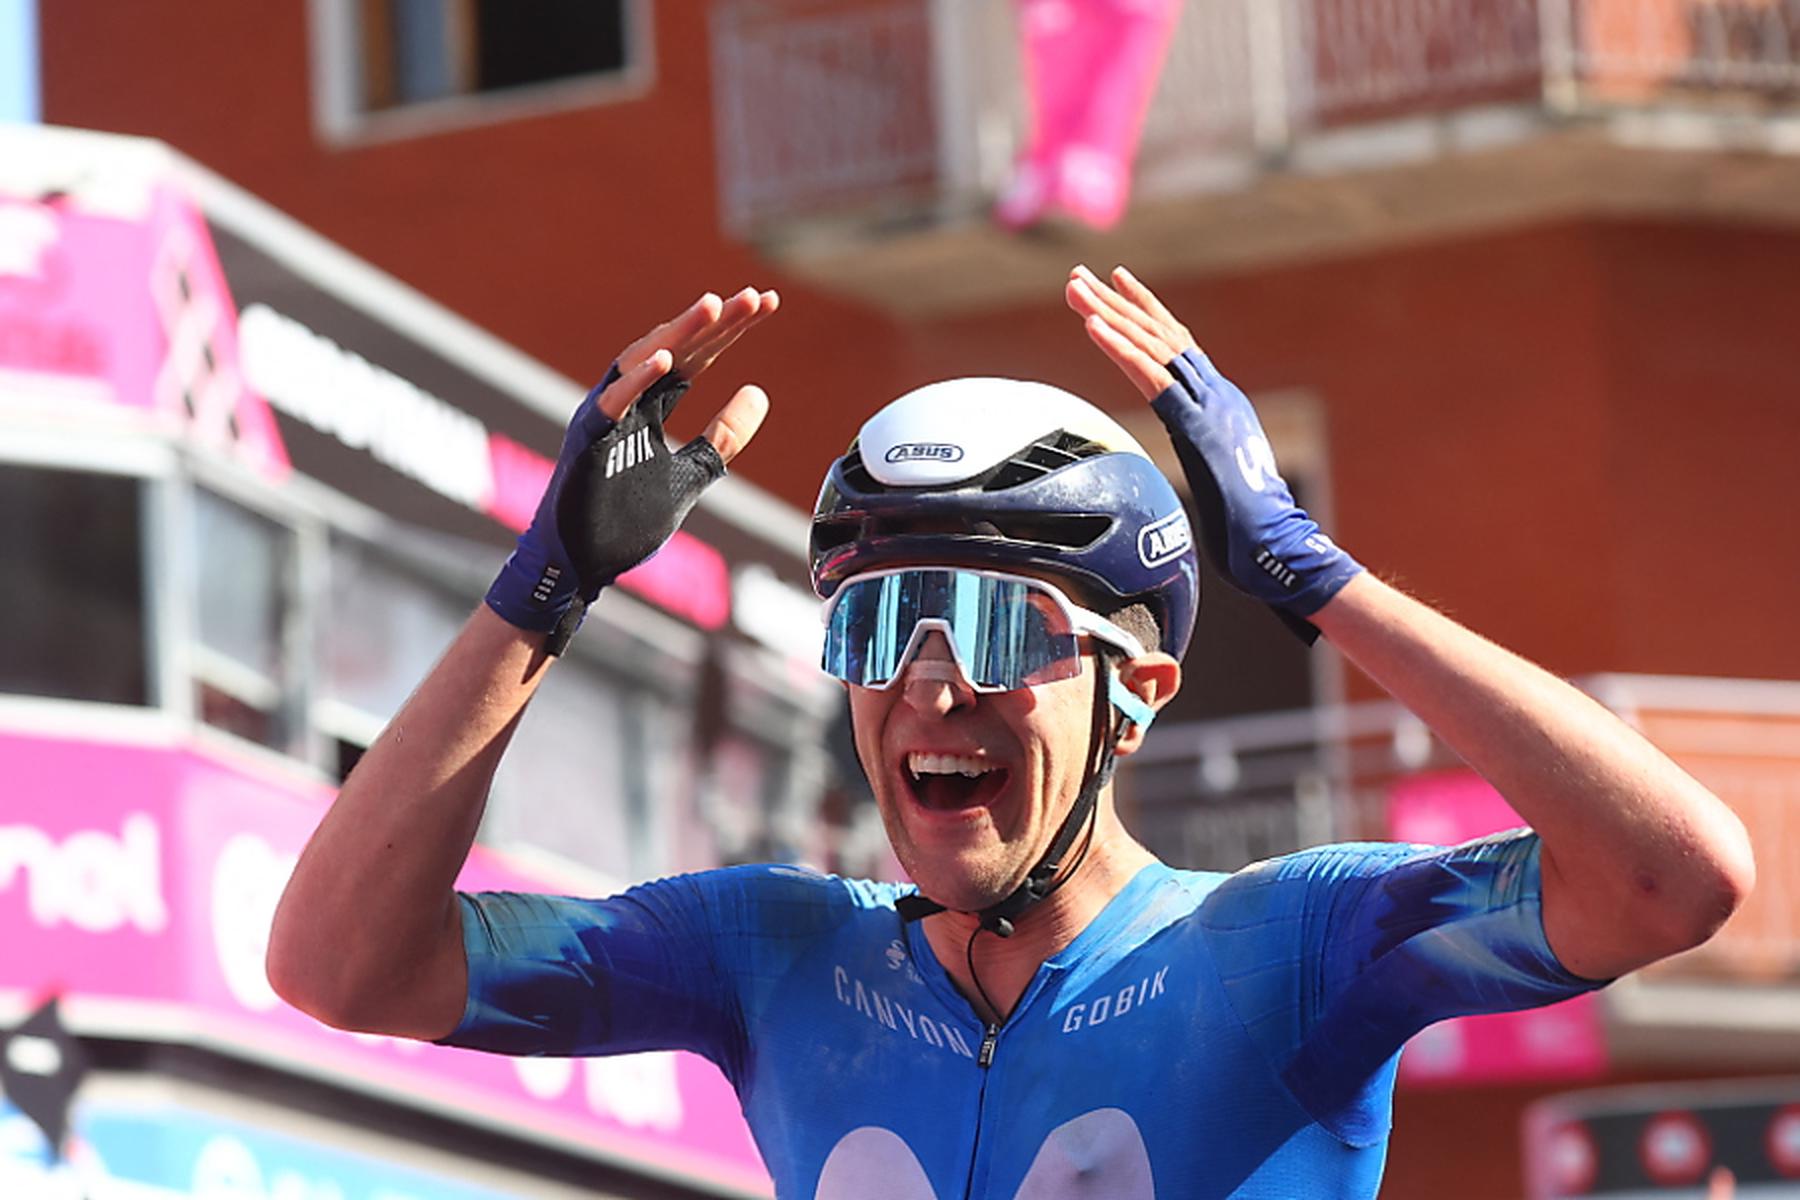 Rapolano Terme: Spanischer Überraschungssieger auf 6. Giro-Etappe